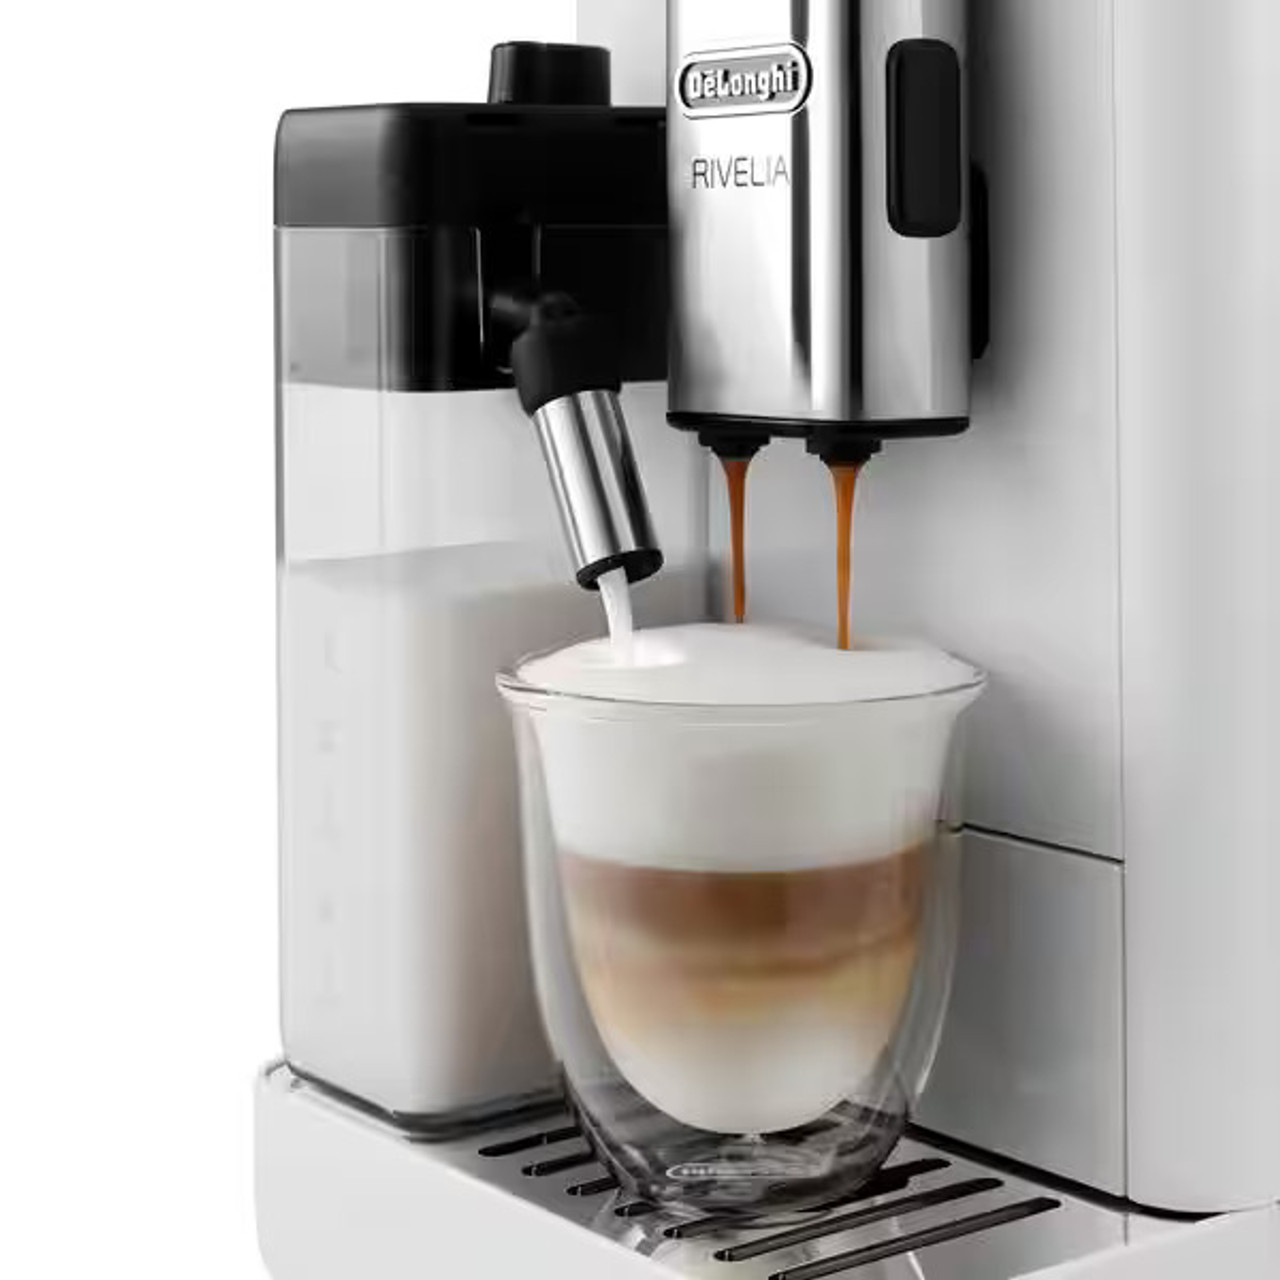 Buy DeLonghi Rivelia Bean-to-Cup Machine, White